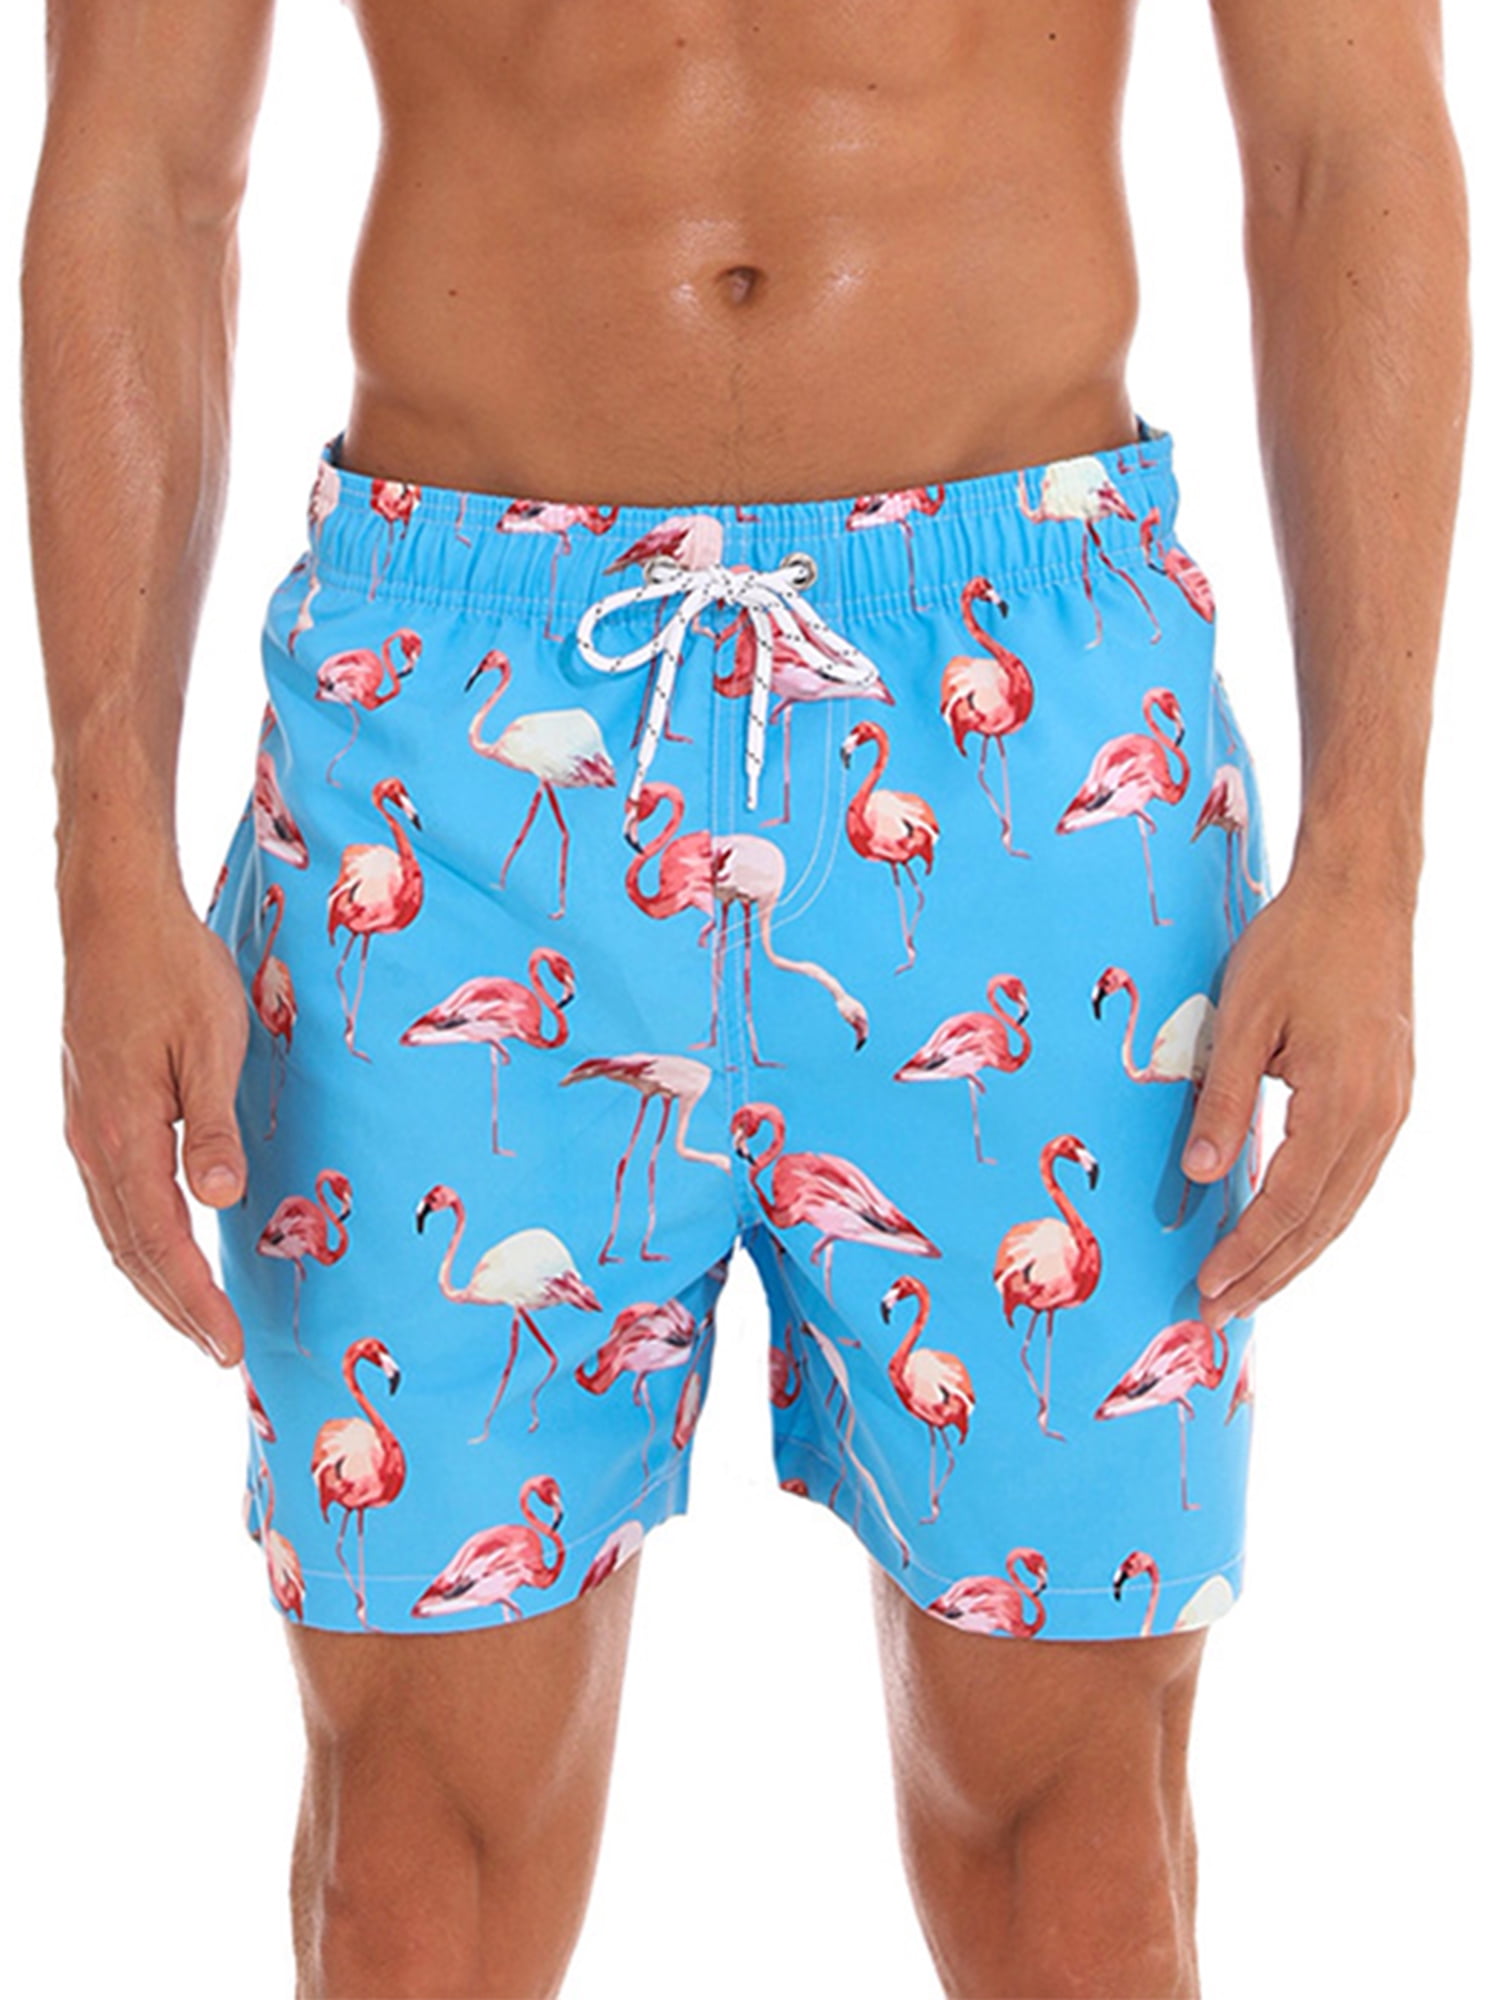 Flamingos Casual Summer Beach Board Shorts Pants for Men Teens